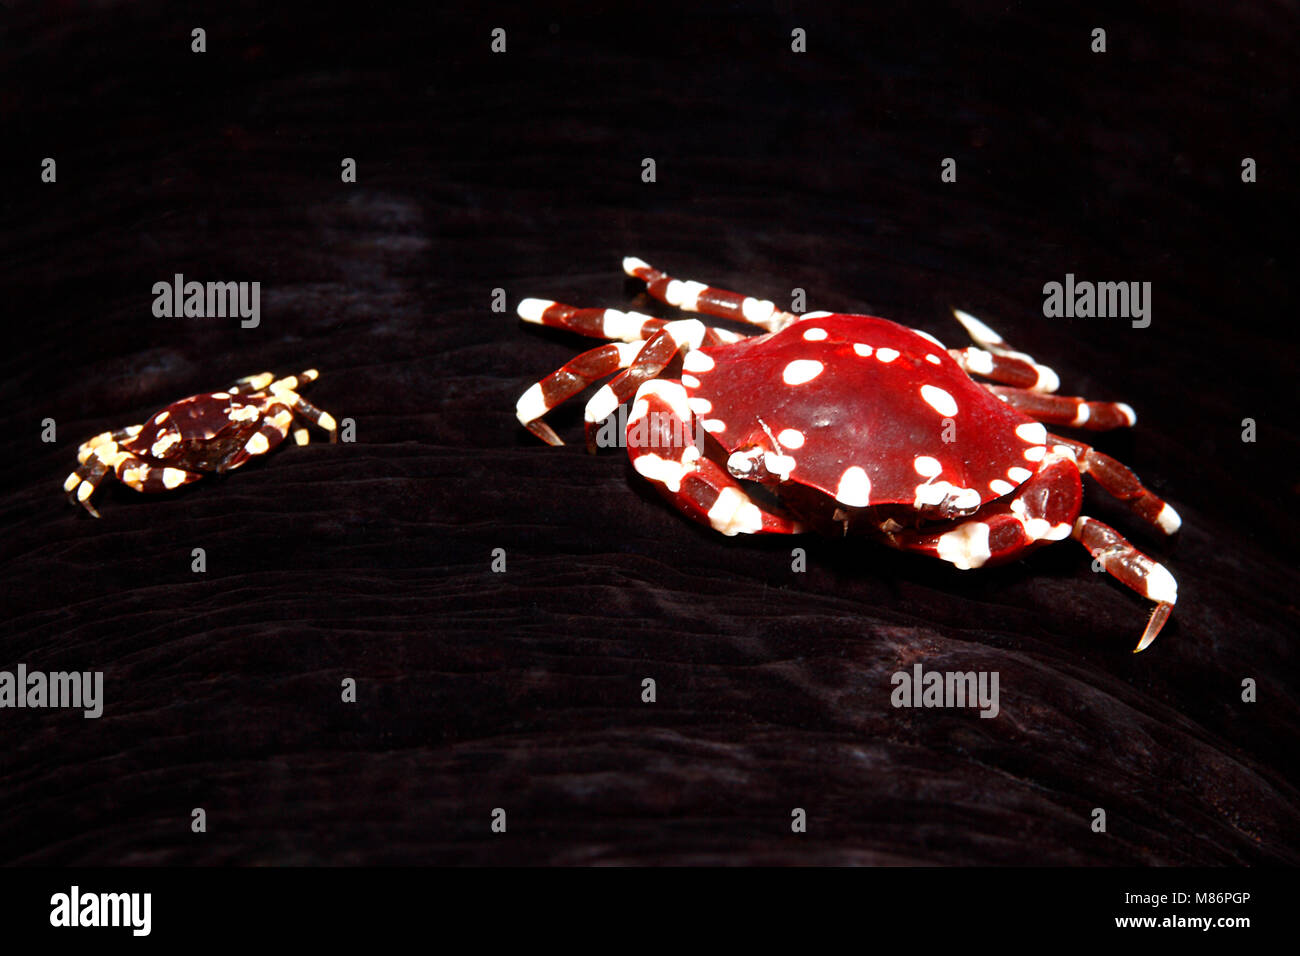 Sea Cucumber Swimming Crabs, Lissocarcinus orbicularis, living on the Black Sea Cucumber, Holothuria atra. Stock Photo